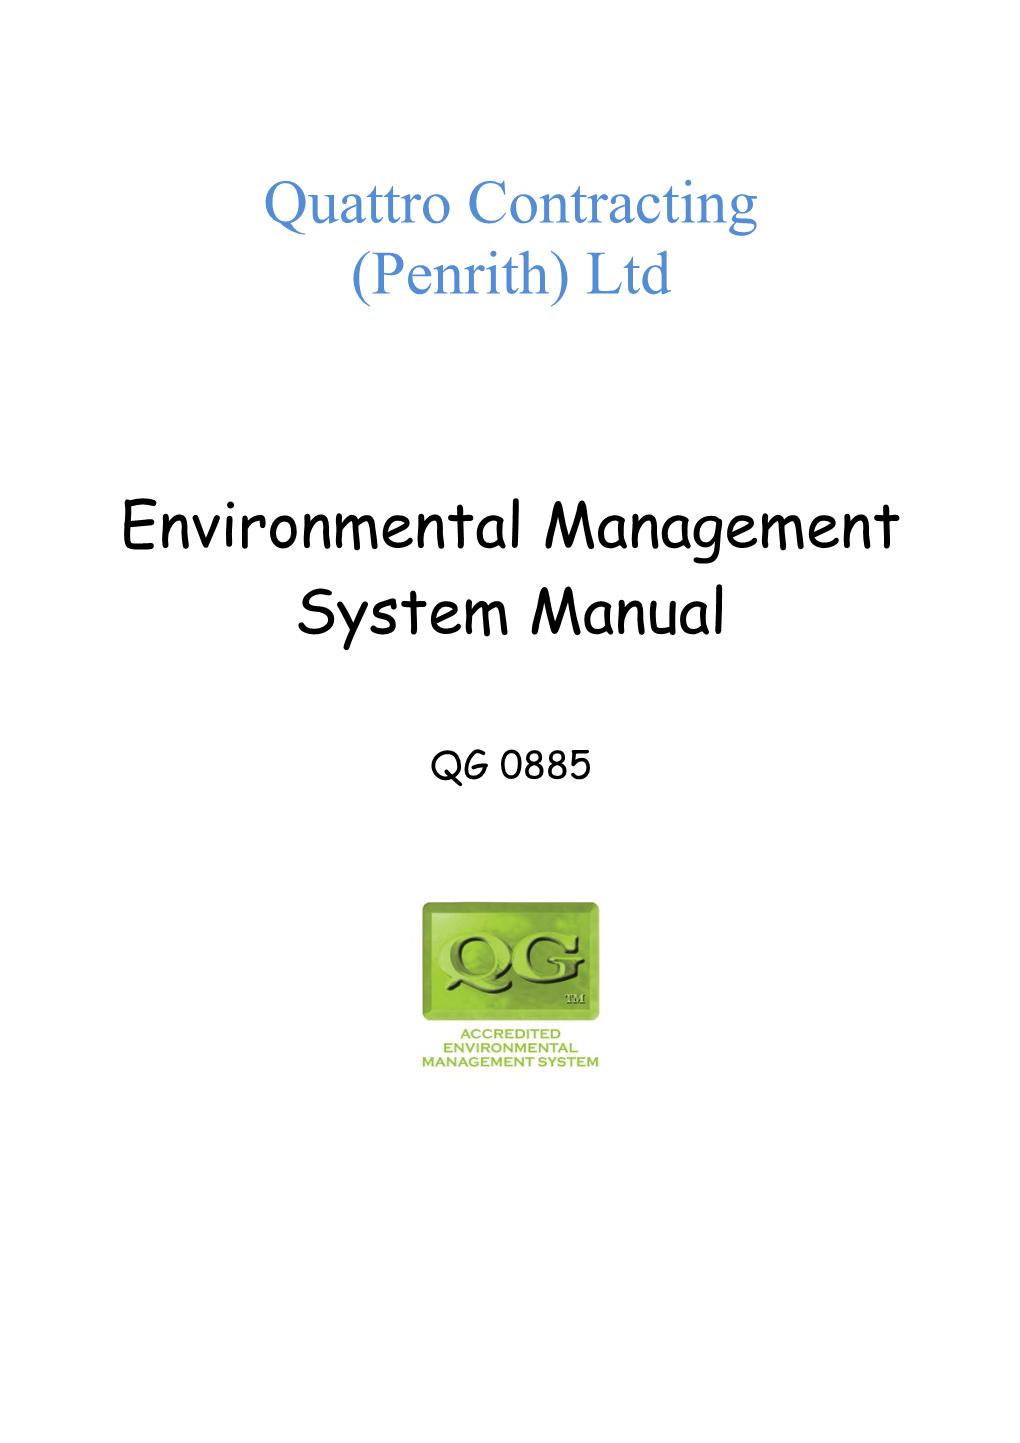 Environmental Management System Manual